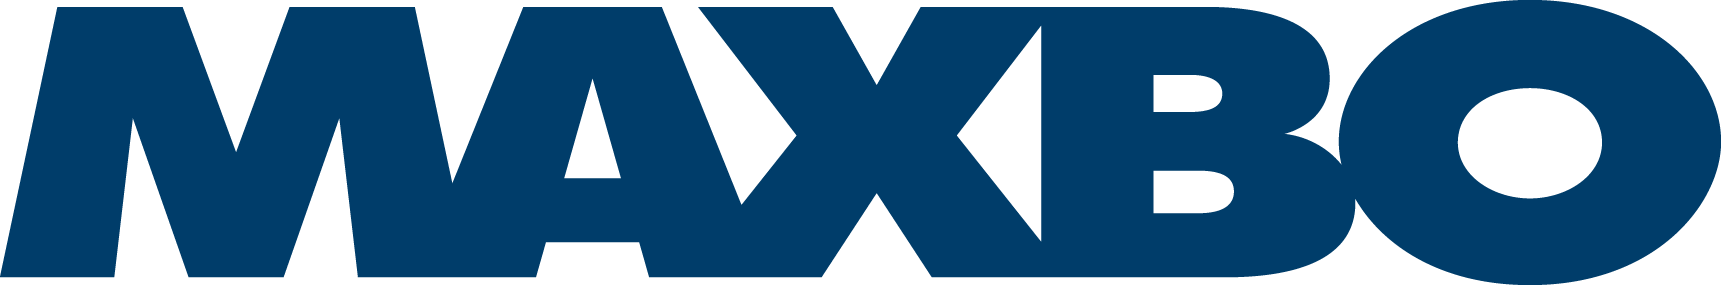 Maxbo logo